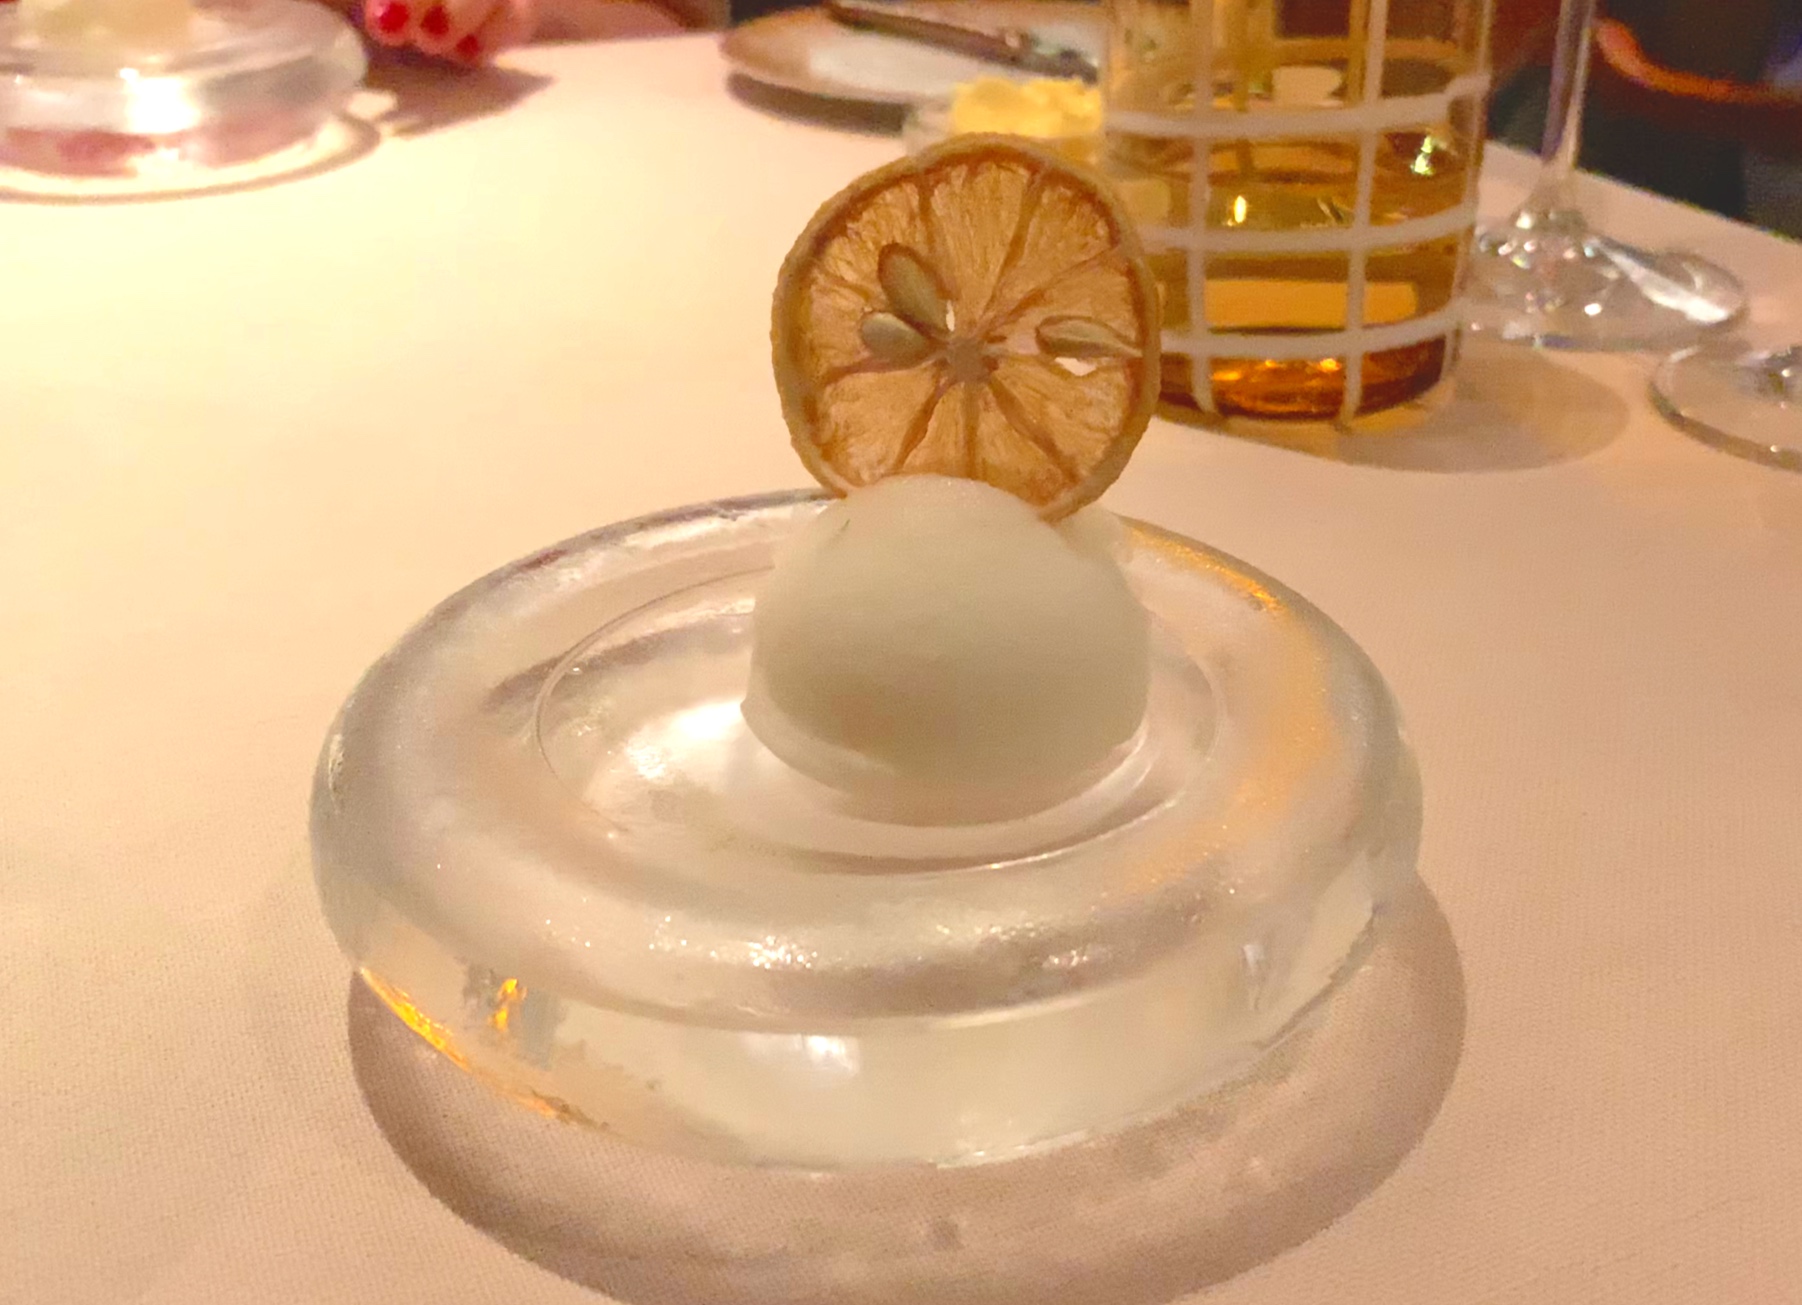  A palate cleansing lemon sorbet.  